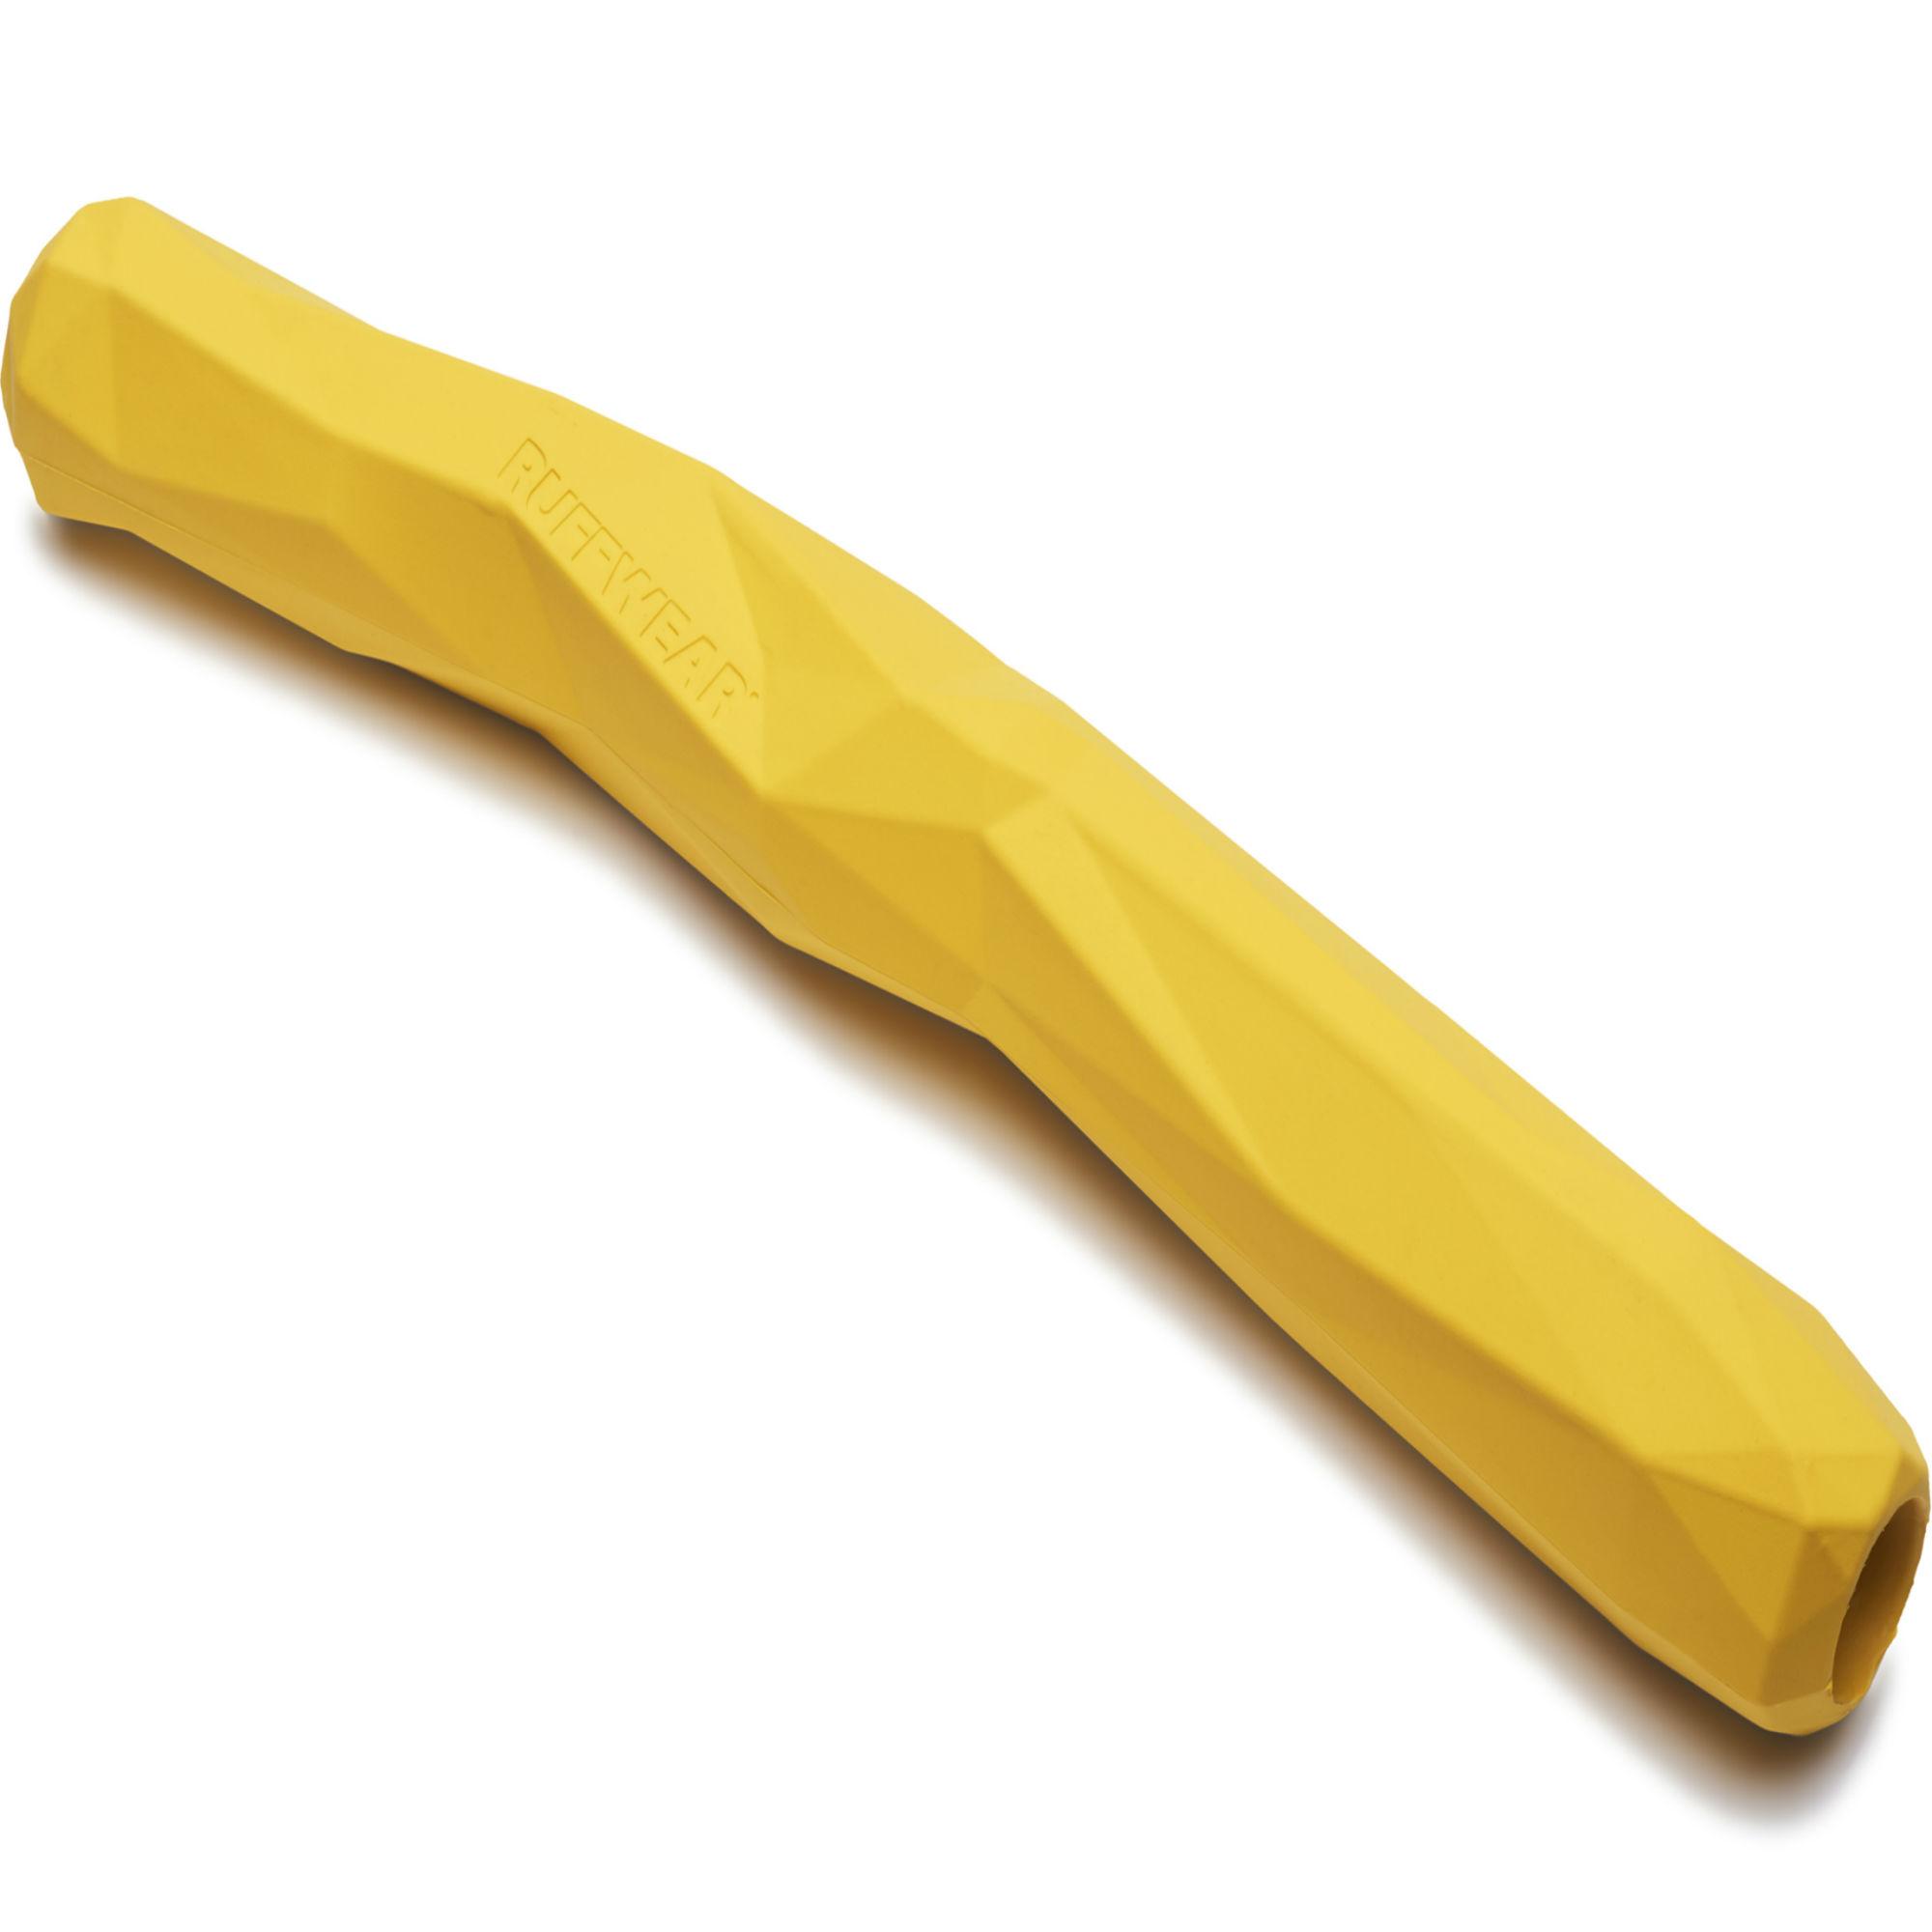 Gnawt-a-Stick Rubber Dog Toy by Ruffwear - Dandelion Yellow